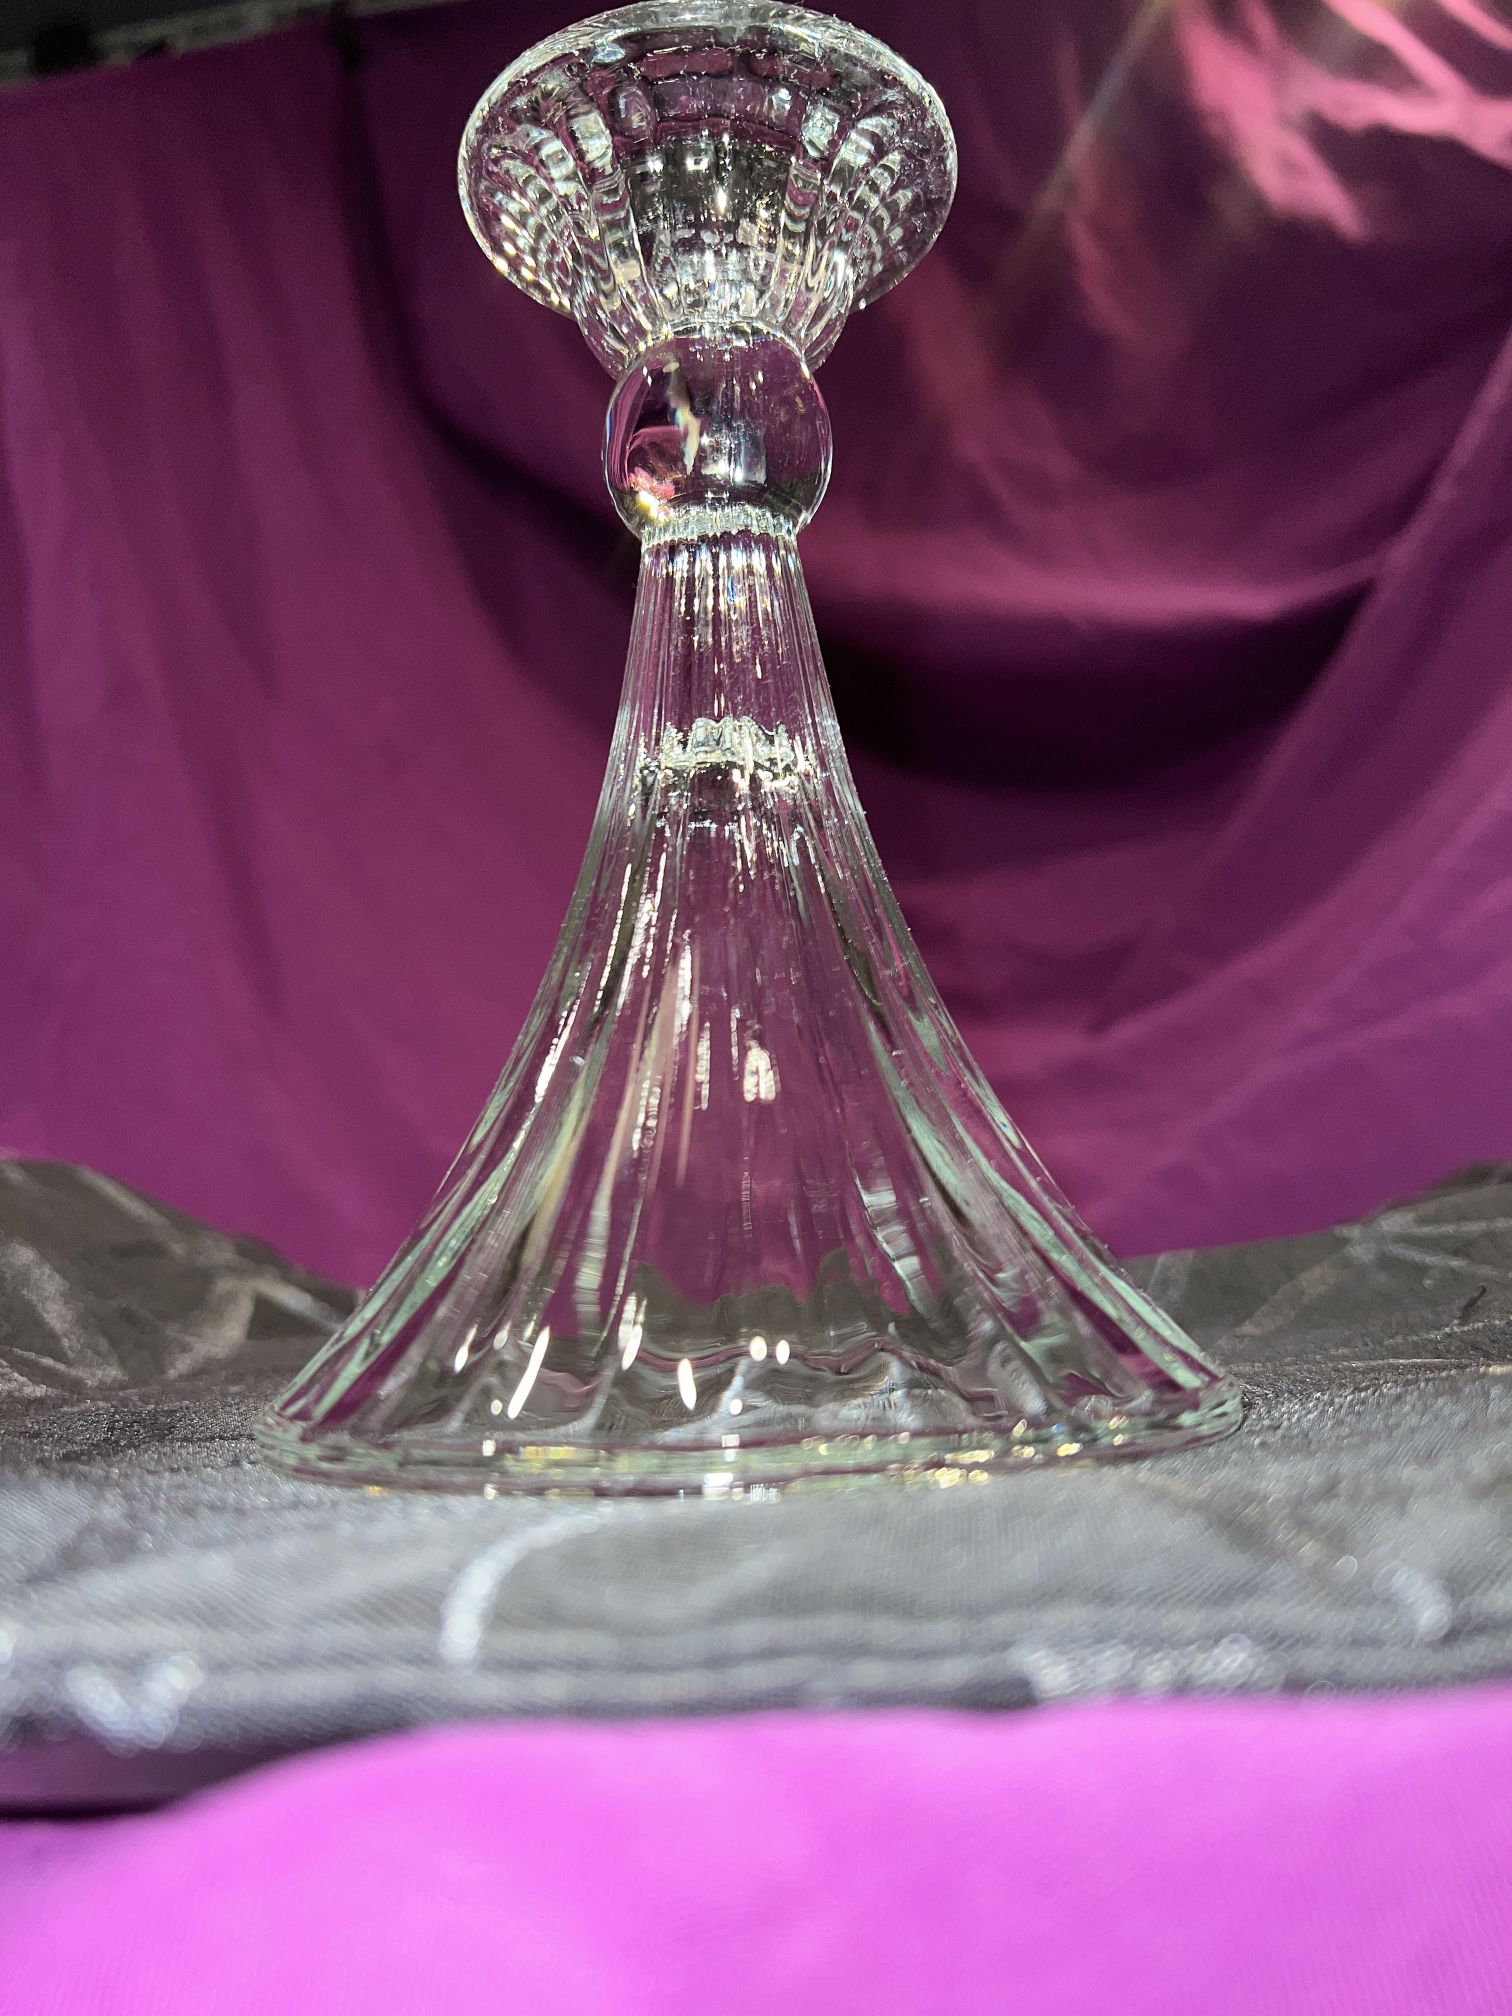 Partylite Elegant Crystal Candle Ball or Candlestick Holder